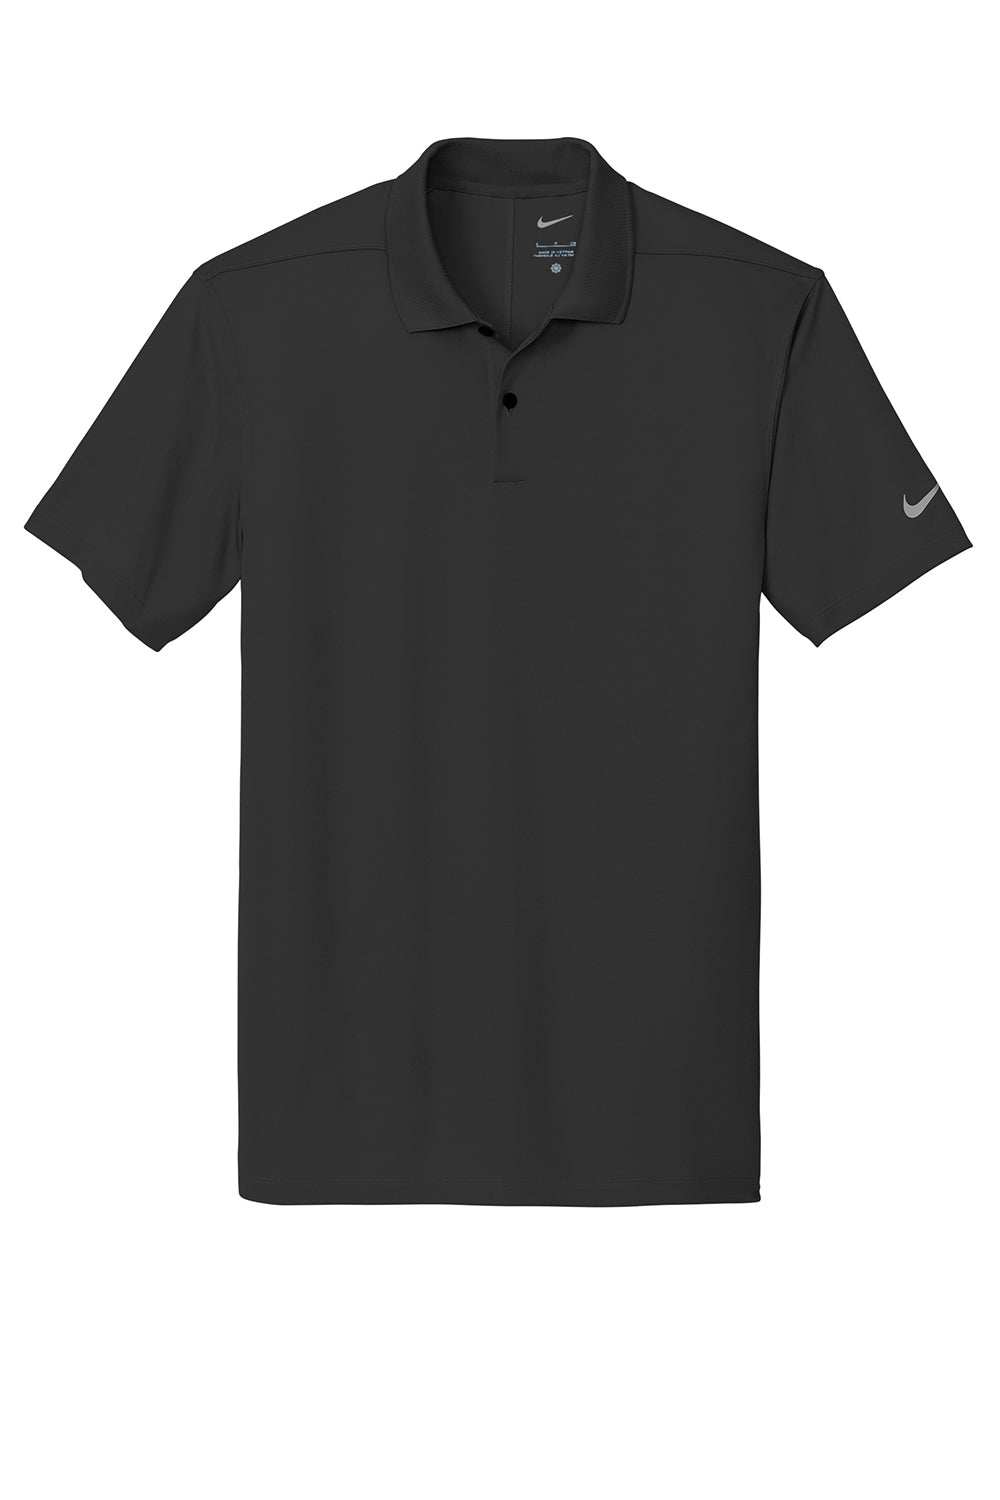 Nike NKDX6684 Mens Victory Dri-Fit Moisture Wicking Short Sleeve Polo Shirt Black Flat Front